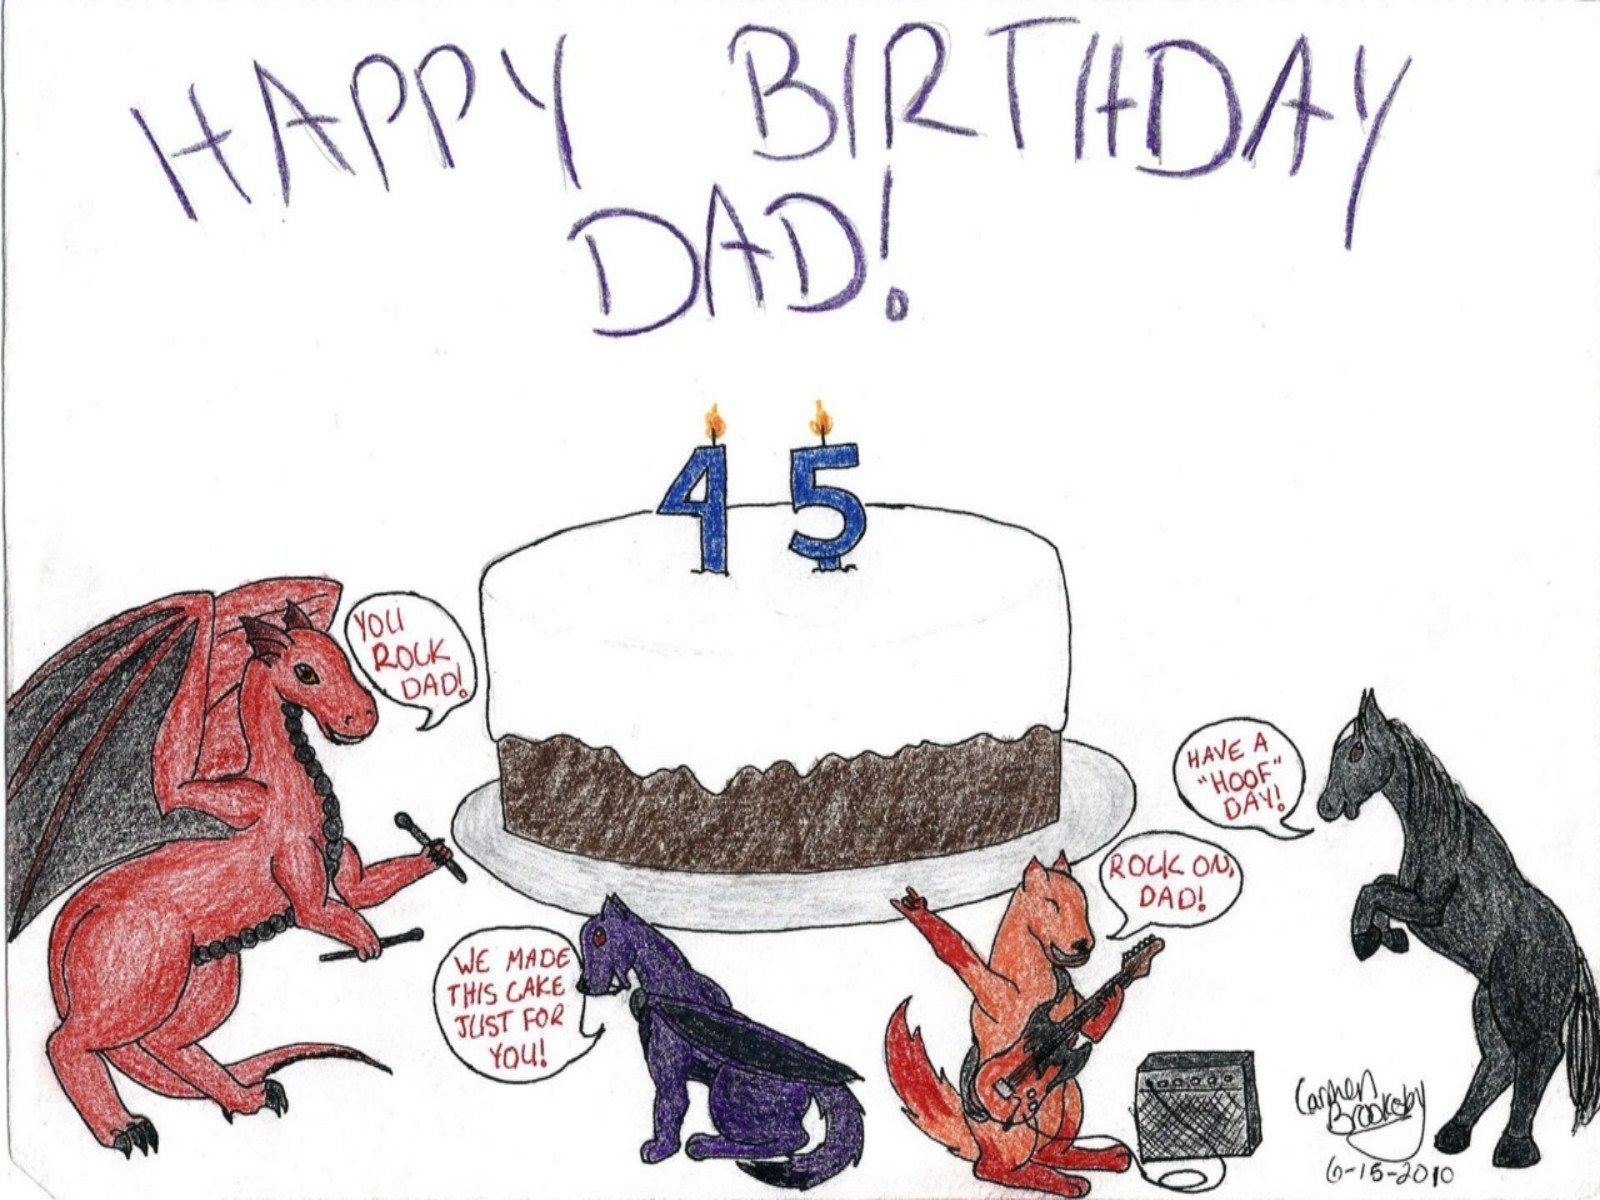 Happy Birthday Funny Hd Image - Happy Birthday 45 Dad - HD Wallpaper 